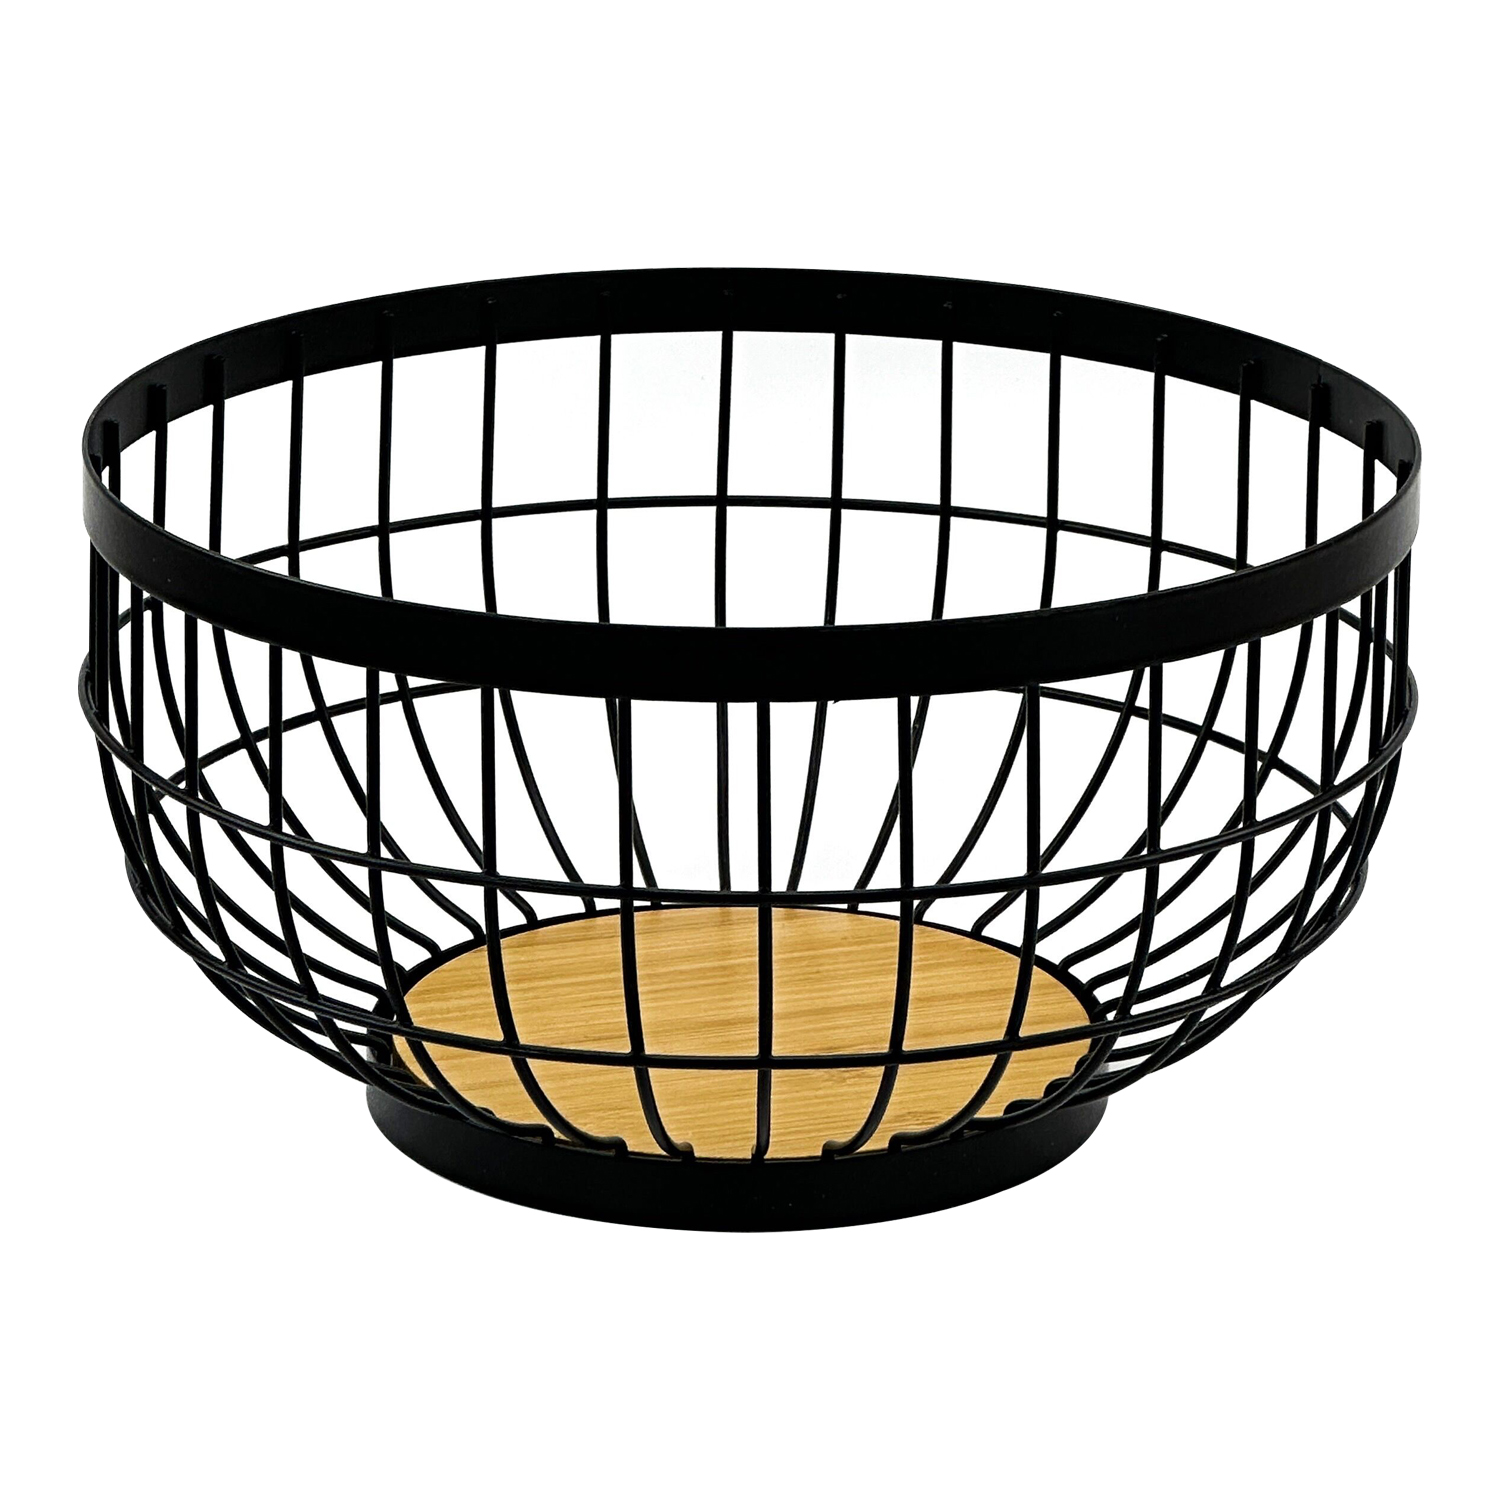 3pcs Metal Storage Basket with Wood Base Storage Basket Paper Towel Holder Round Kitchen Utensils Holder Metal With Wood